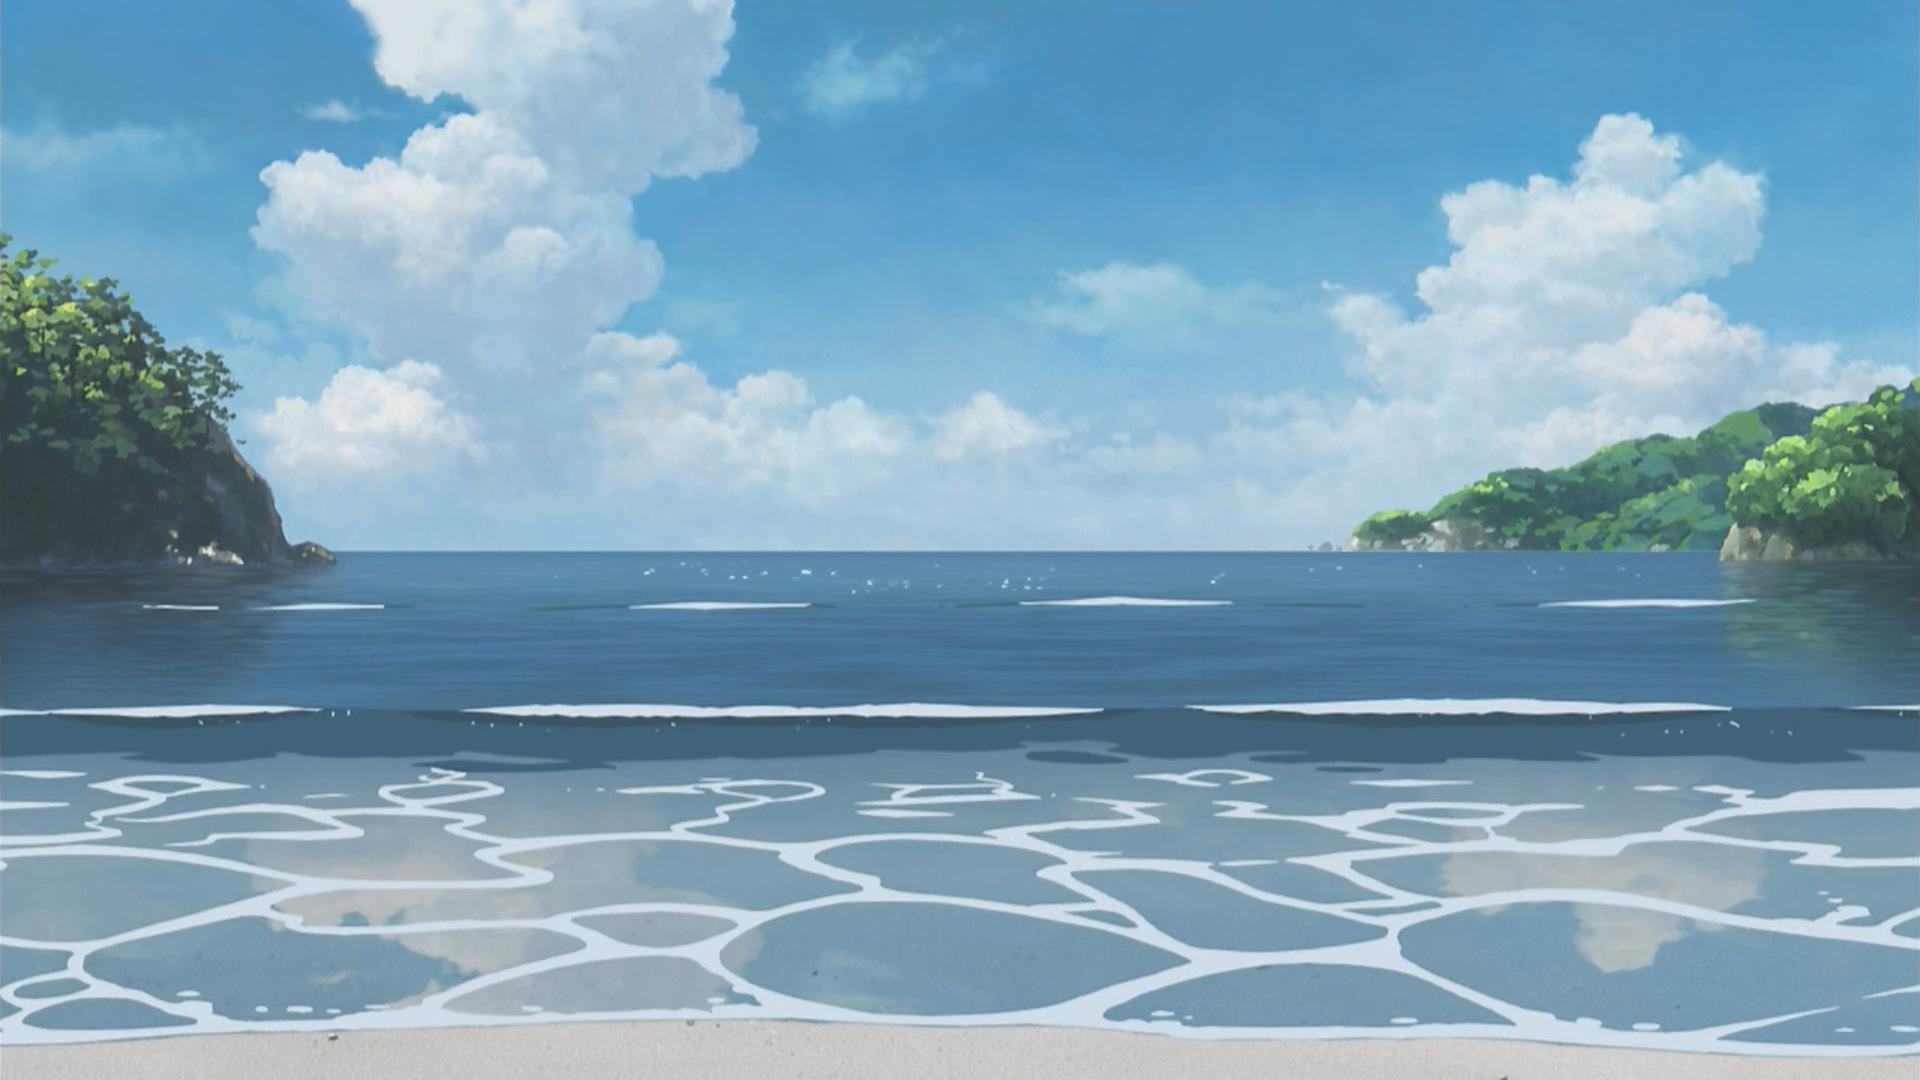 date a live anime beach wallpaper